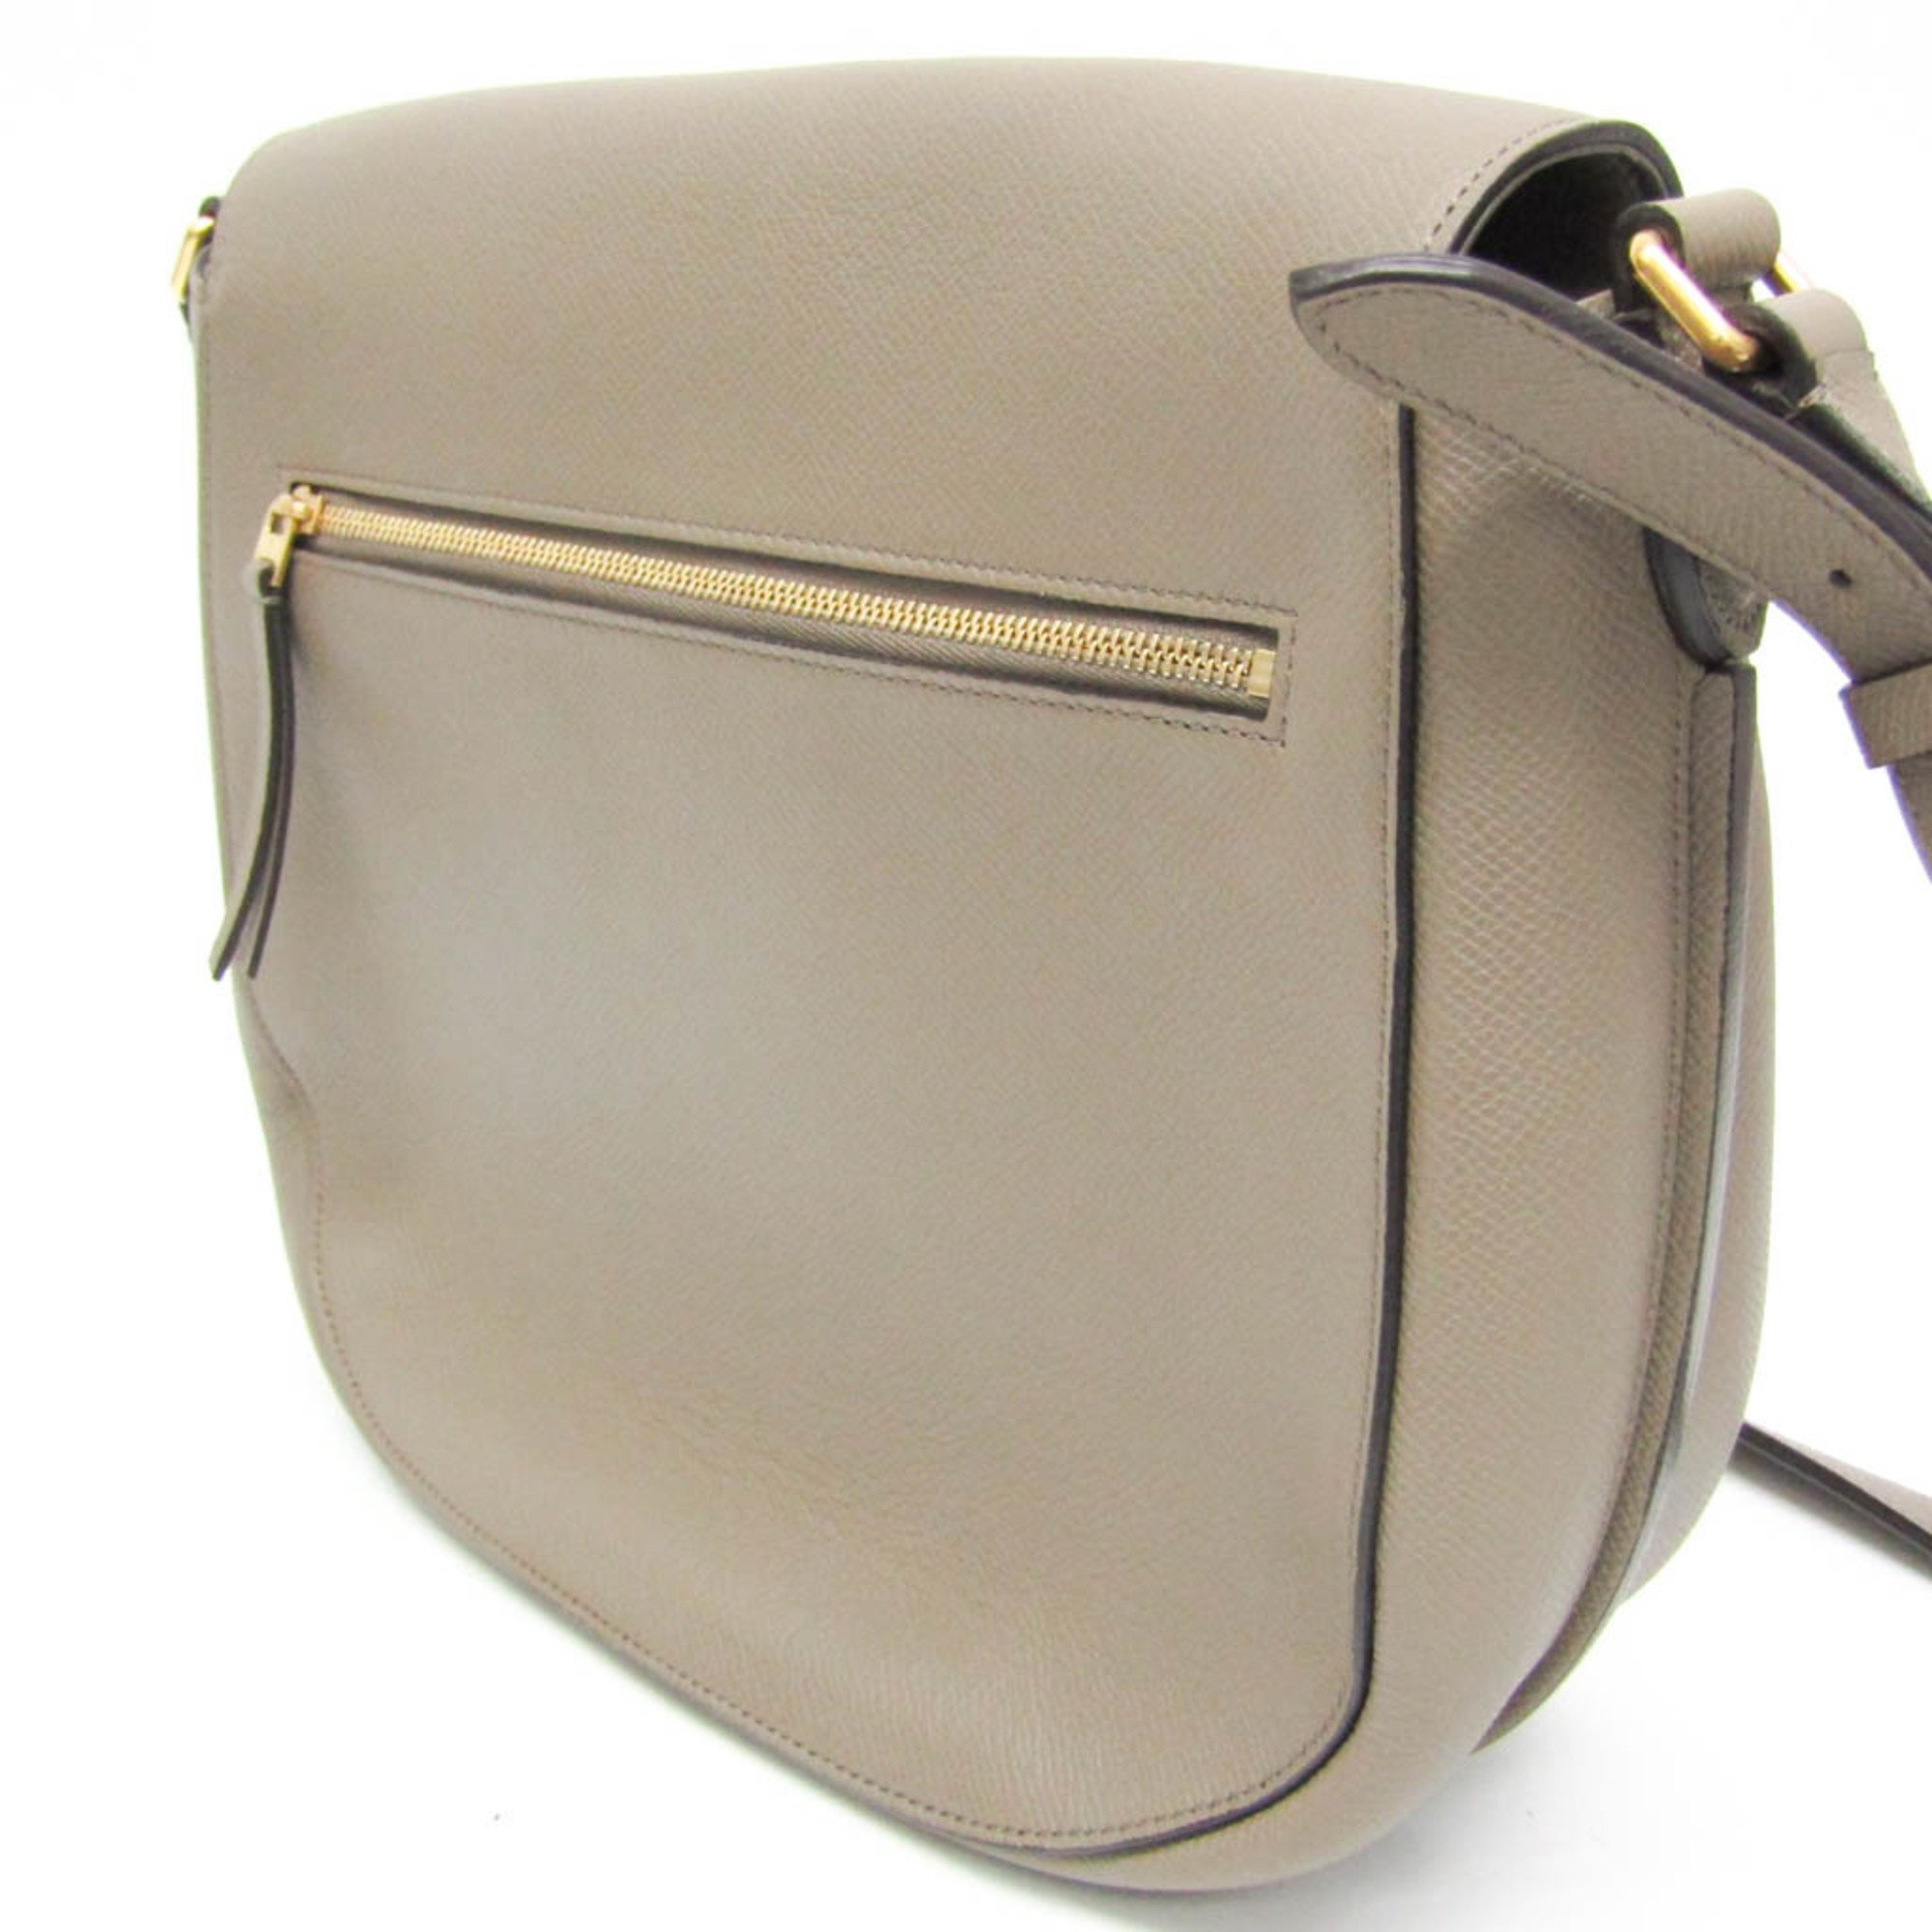 Celine Trotter Medium Women's Leather Shoulder Bag Grayish